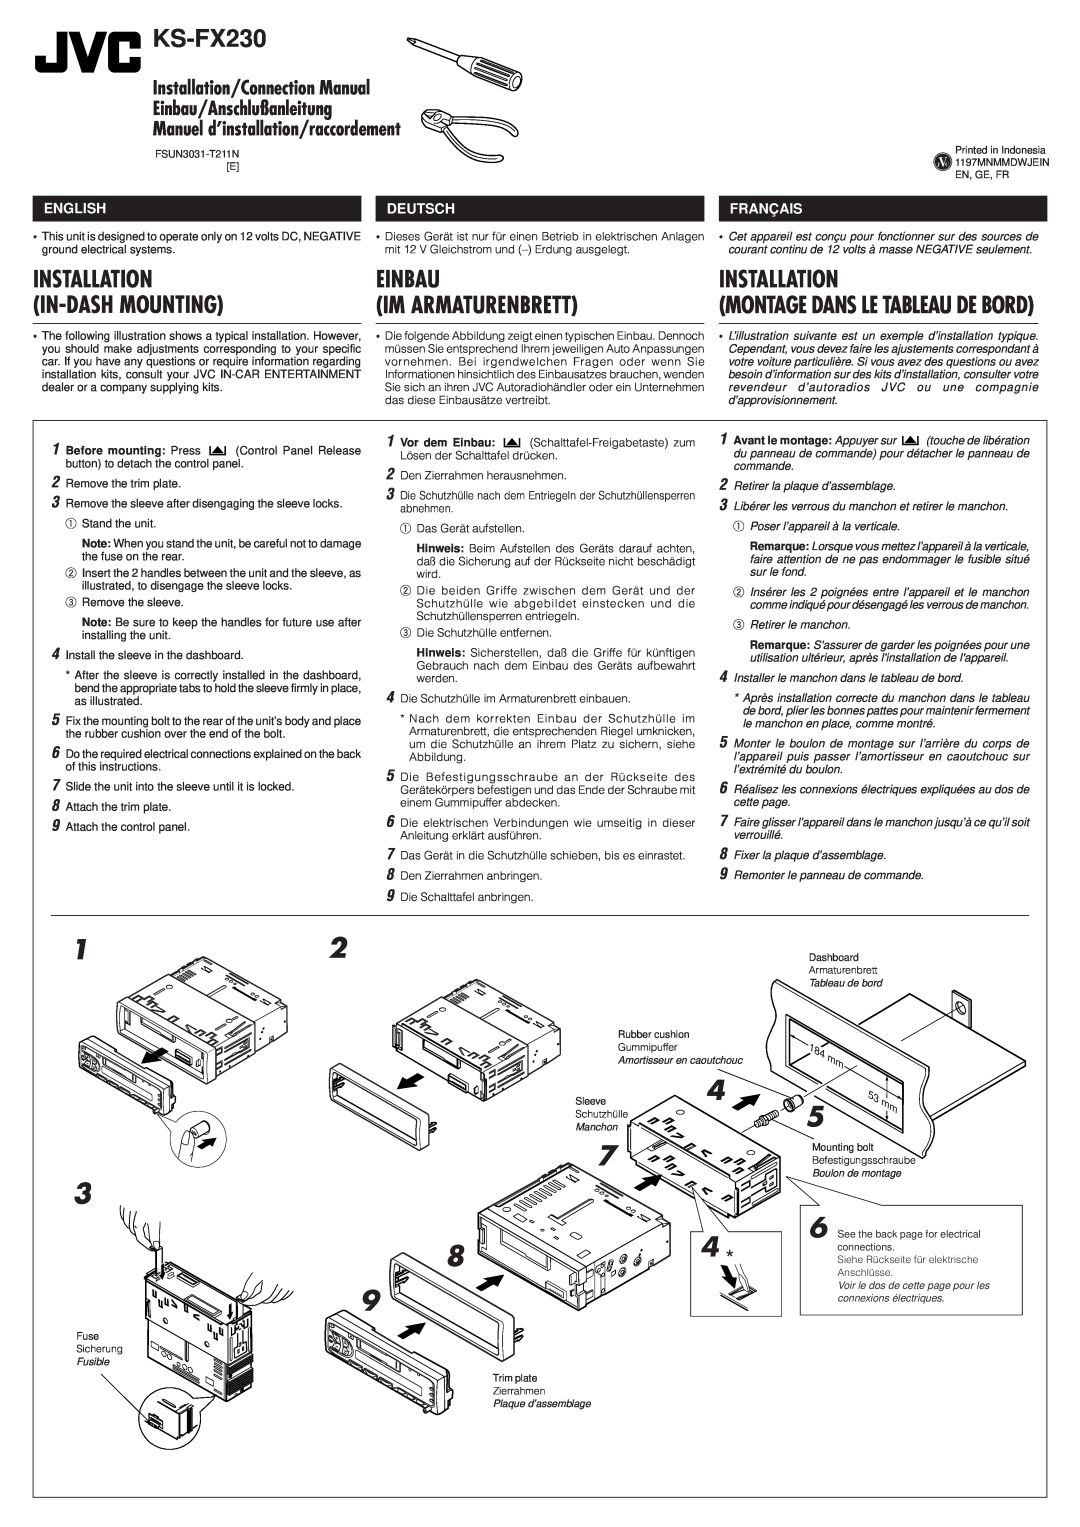 JVC KS-FX230 manual Einbau Im Armaturenbrett, English, Deutsch, Français, Installation/Connection Manual 